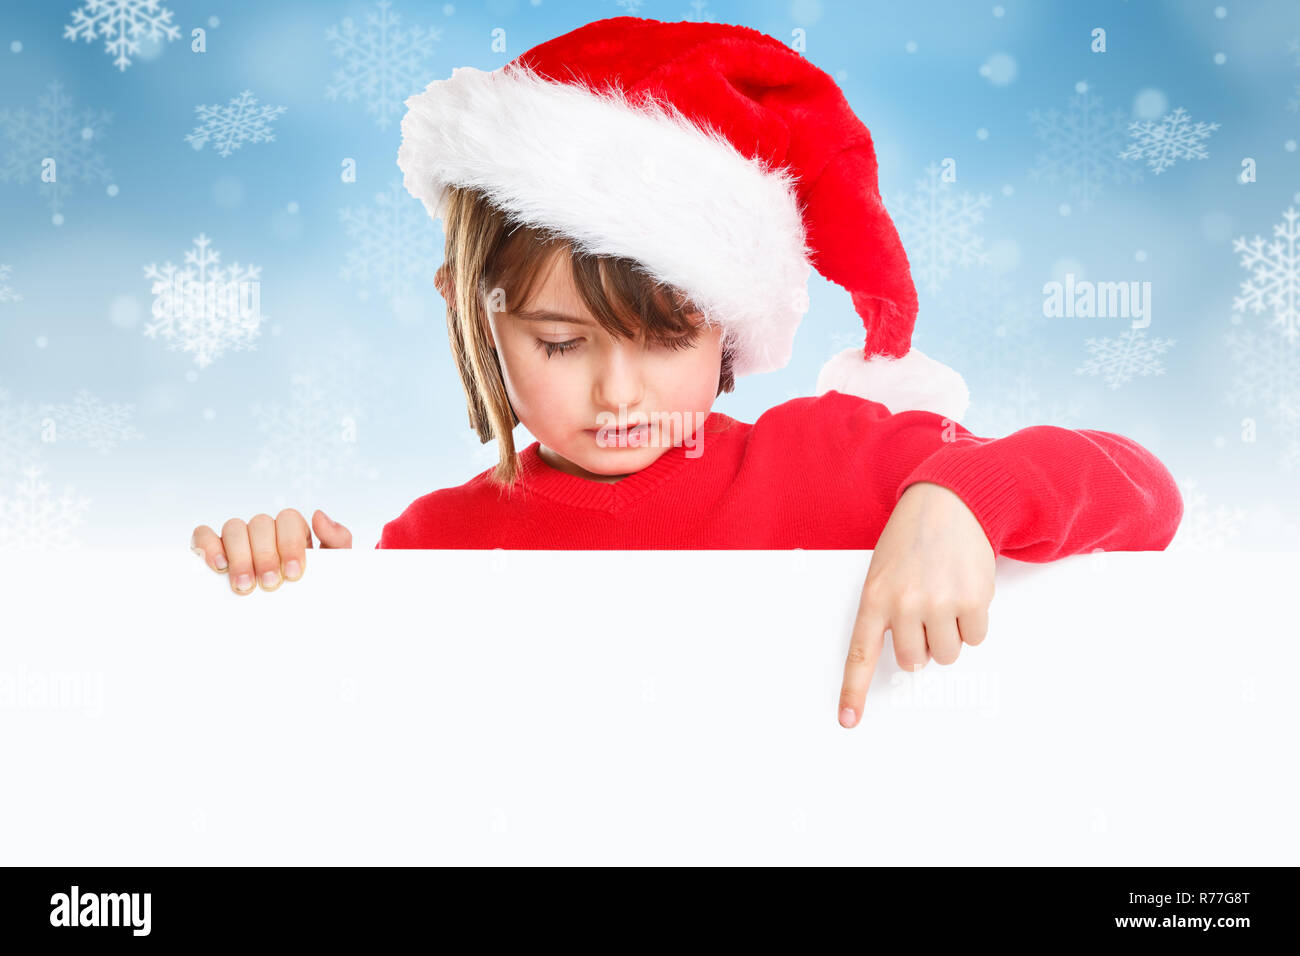 Natale bambino kid girl Santa Claus puntamento banner vuoto neve nevica copyspace Foto Stock